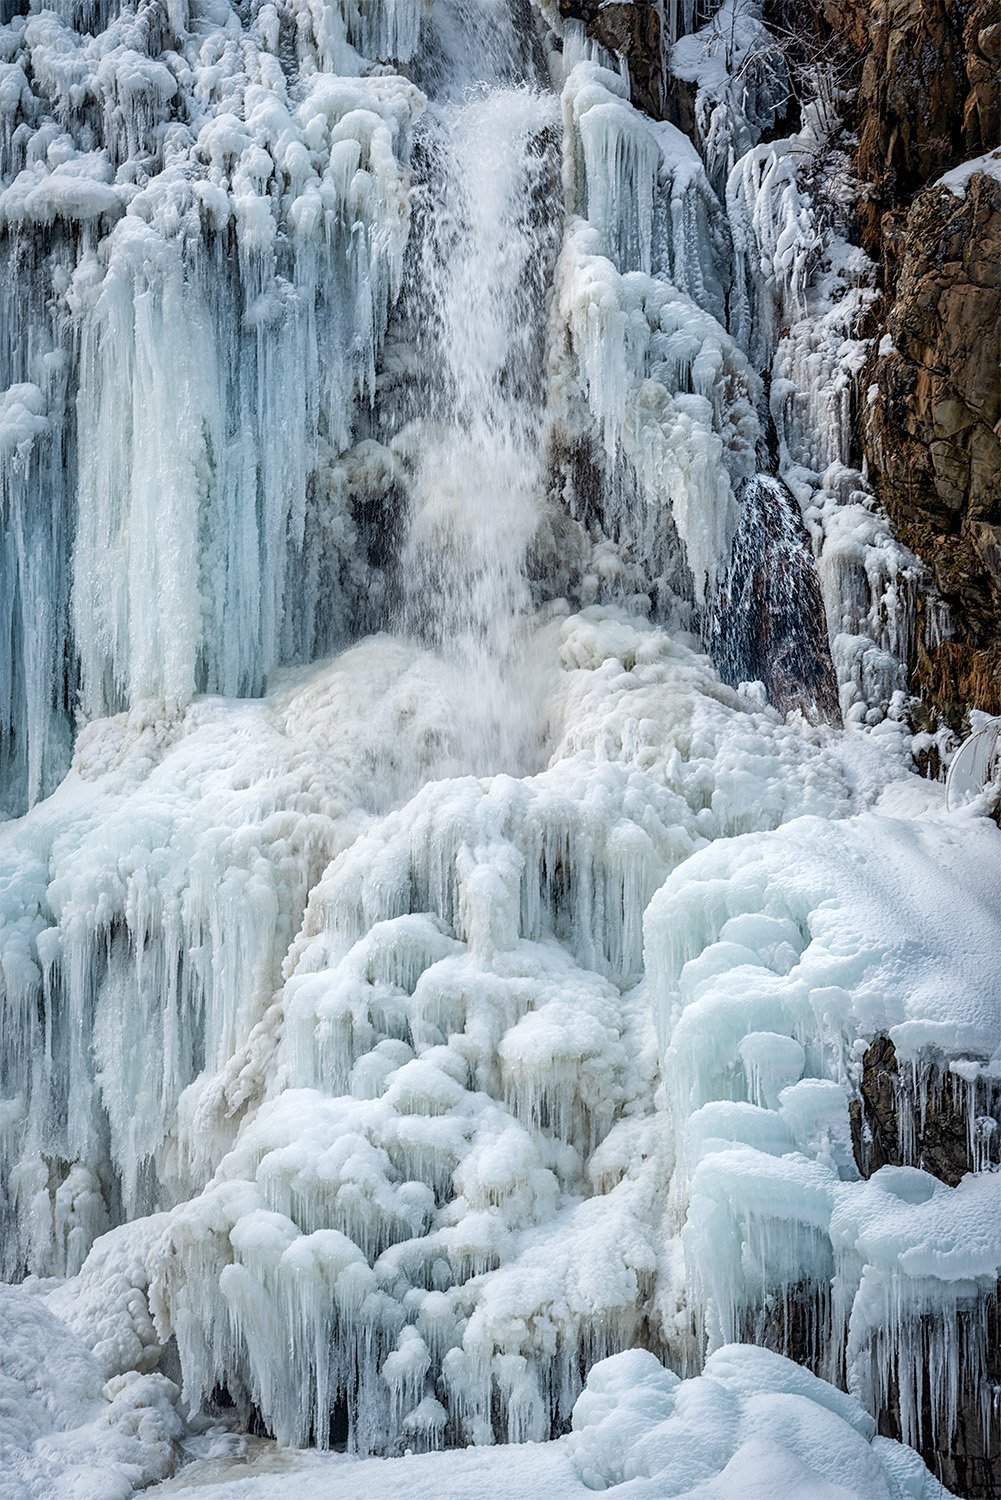 Frozen Waterfall - Drung Falls, Gulmarg, Kashmir, India